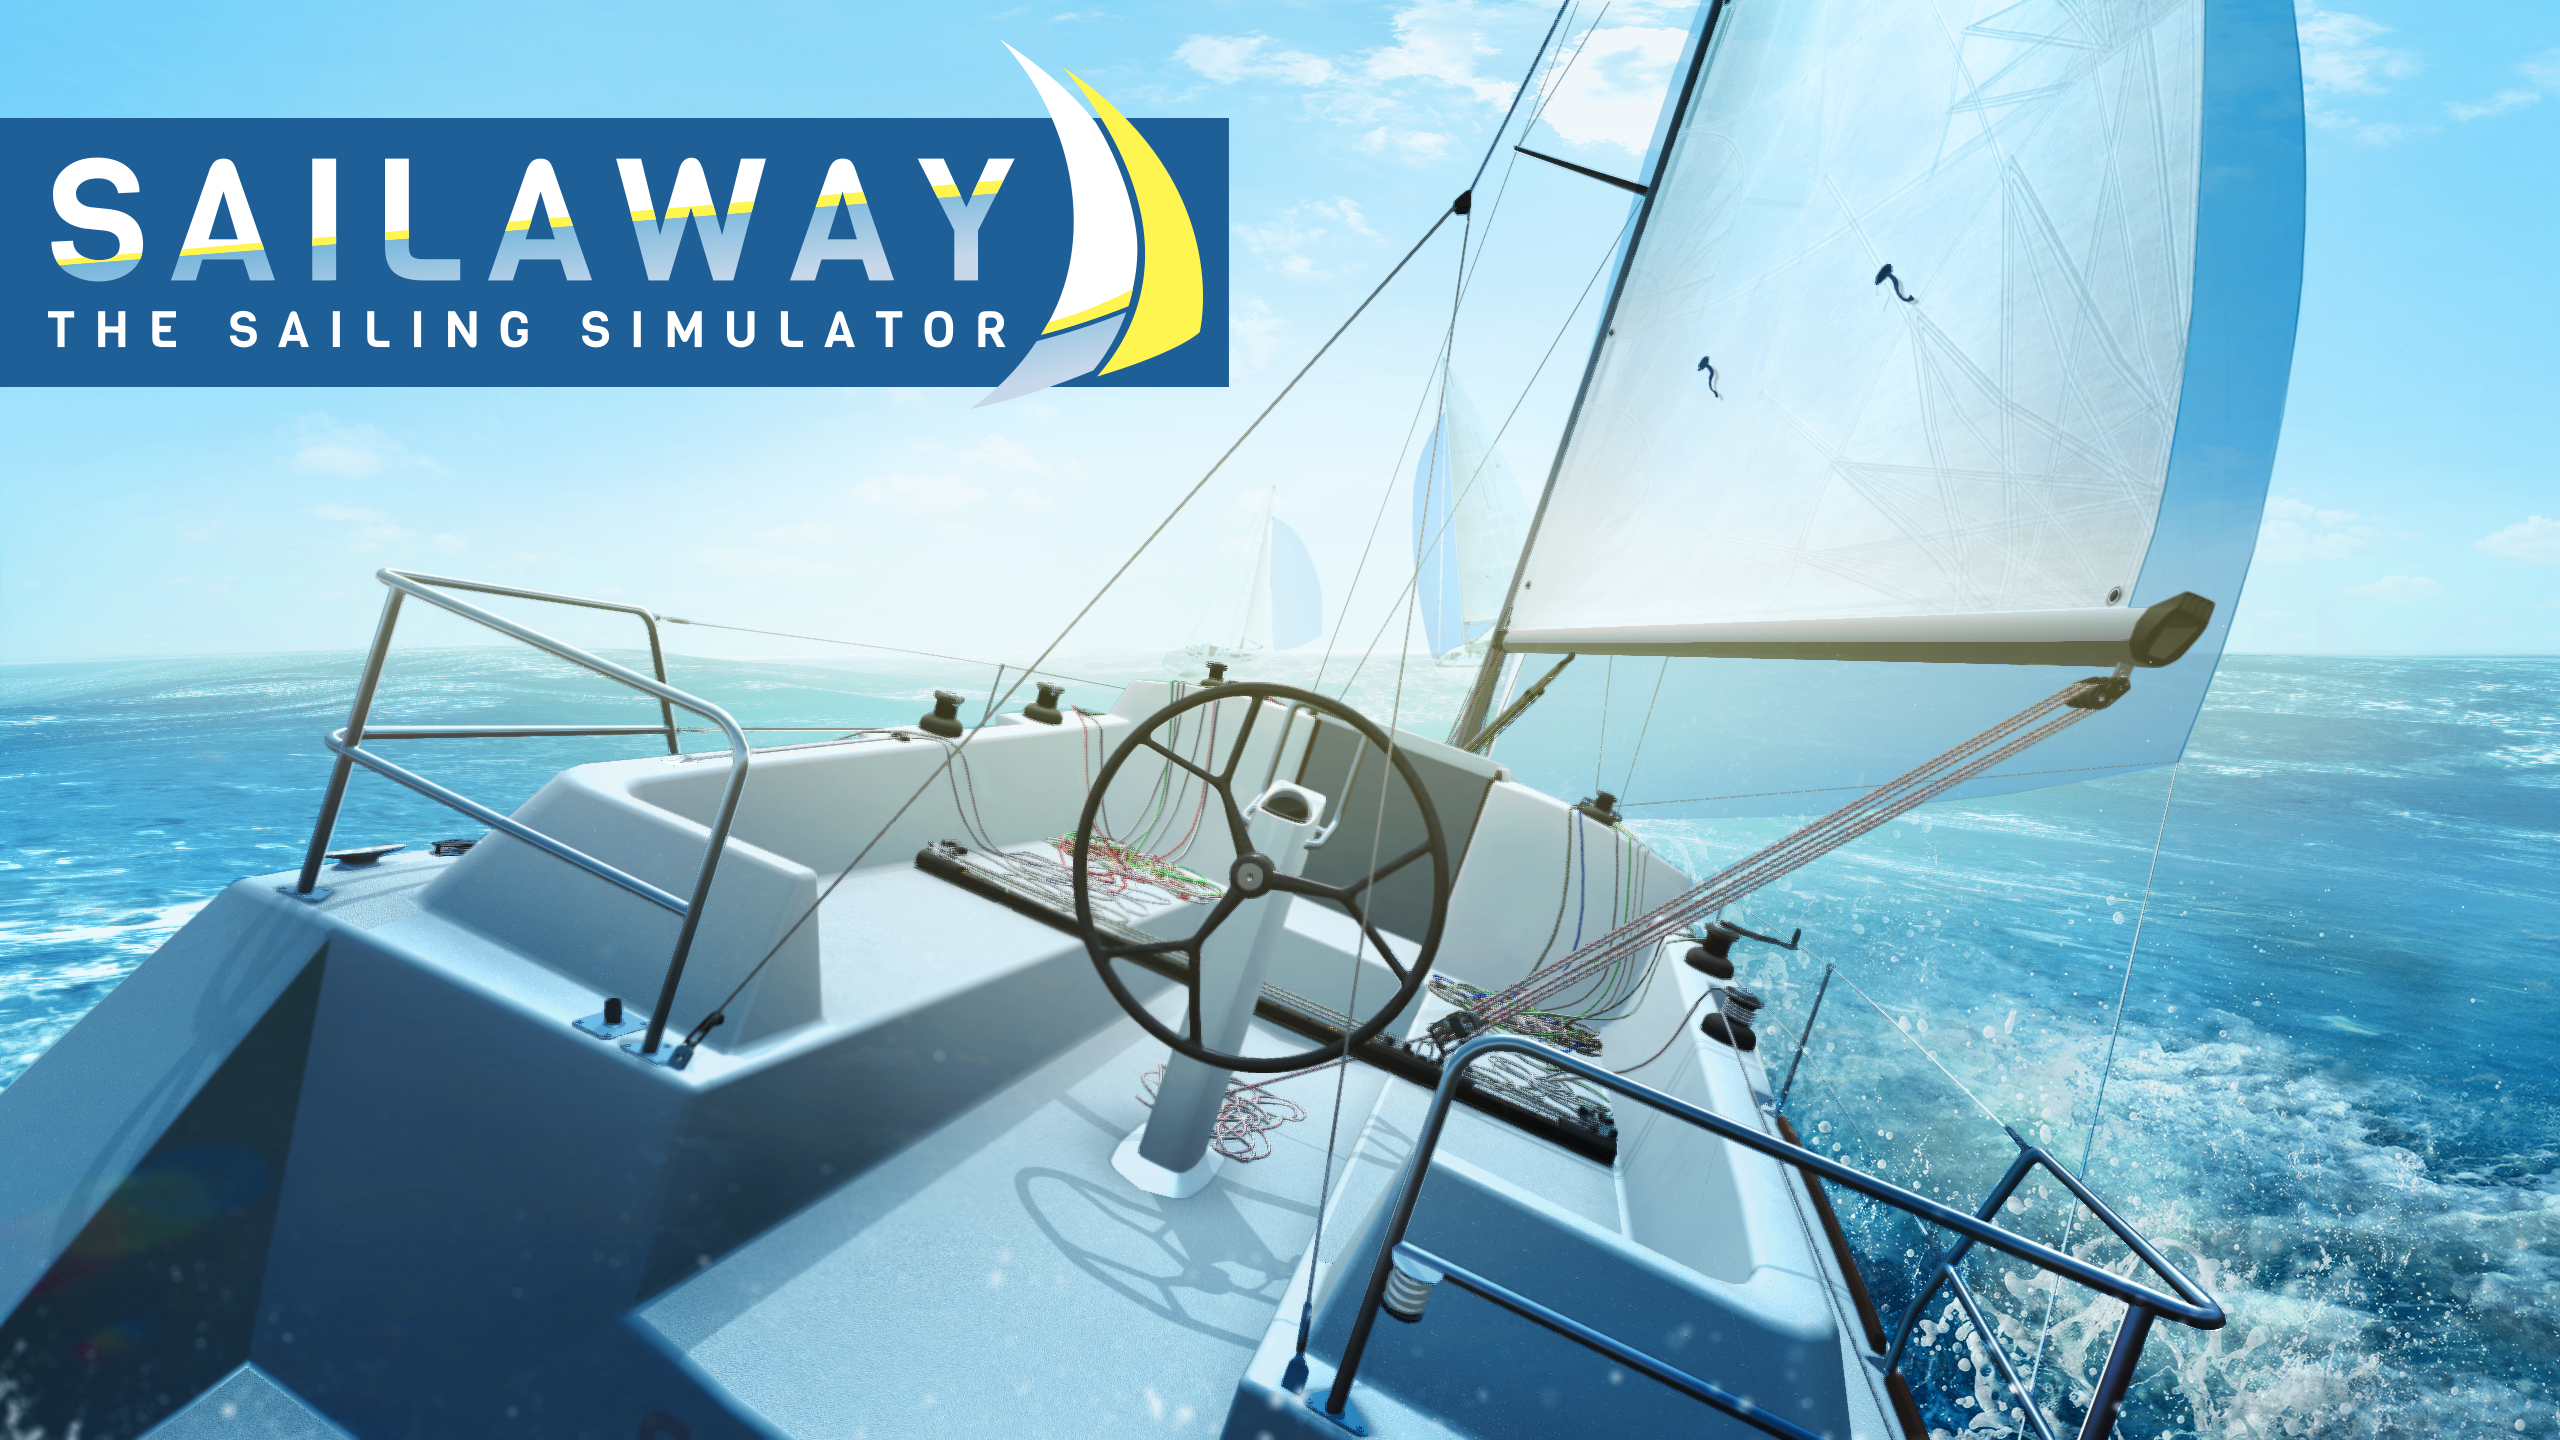 Sailaway - The Sailing Simulator Picture